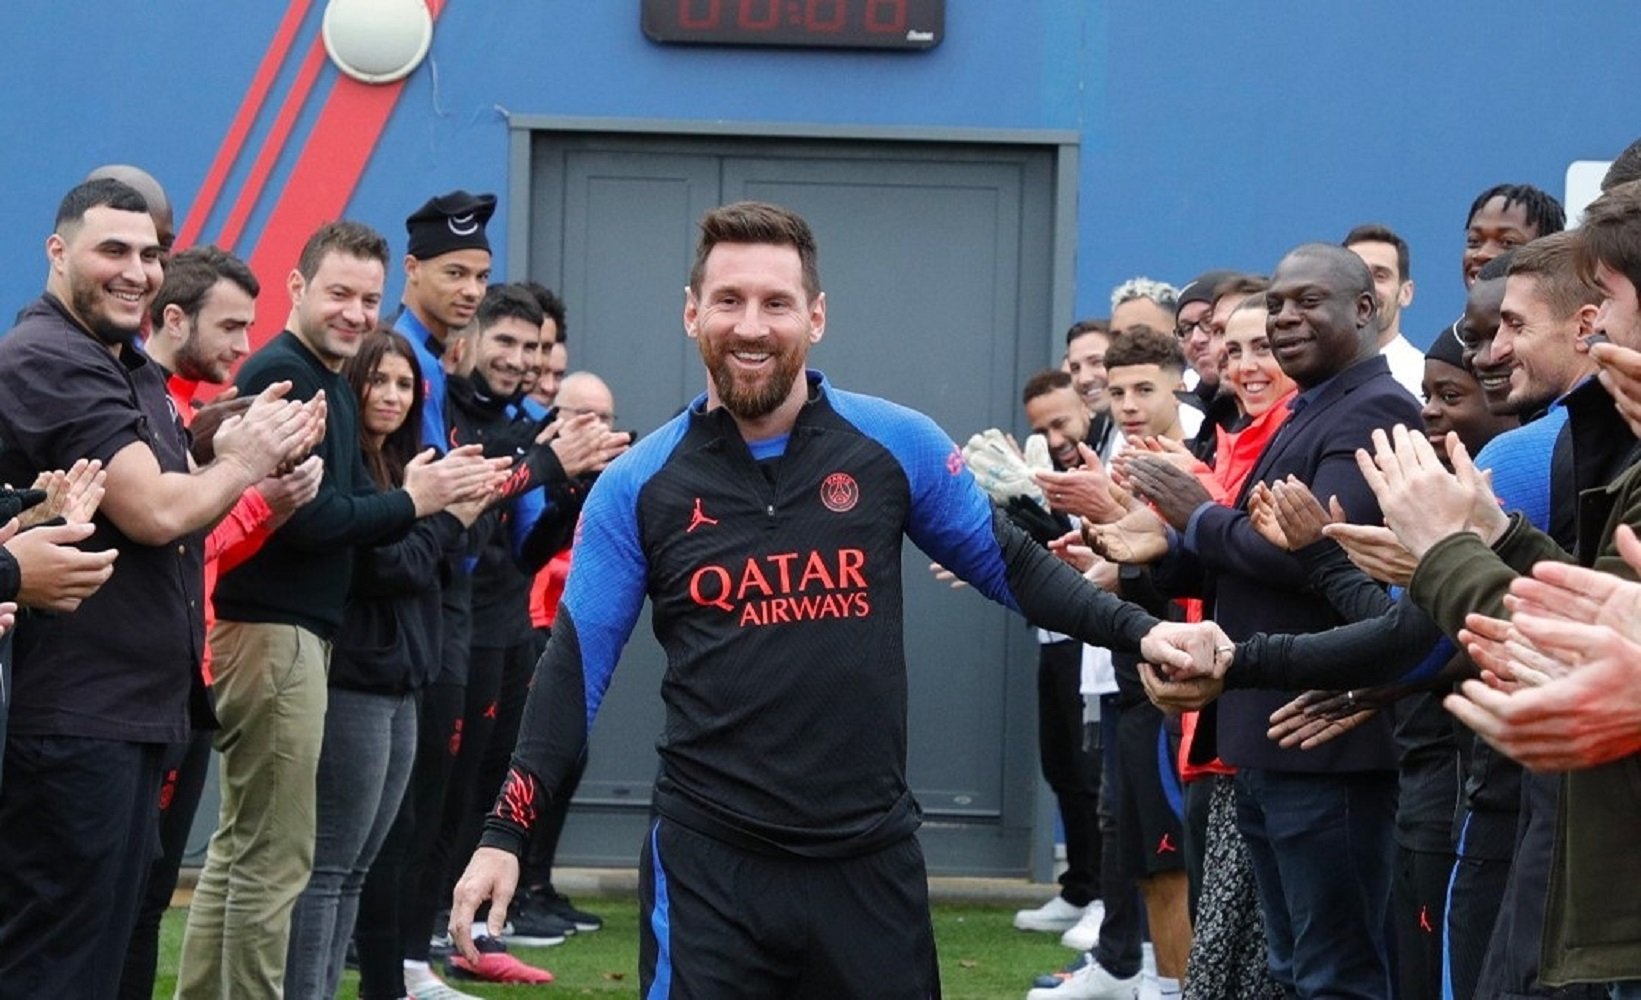 Messi aplausos PSG campeón del mundo / Foto: PSG - Europa Press